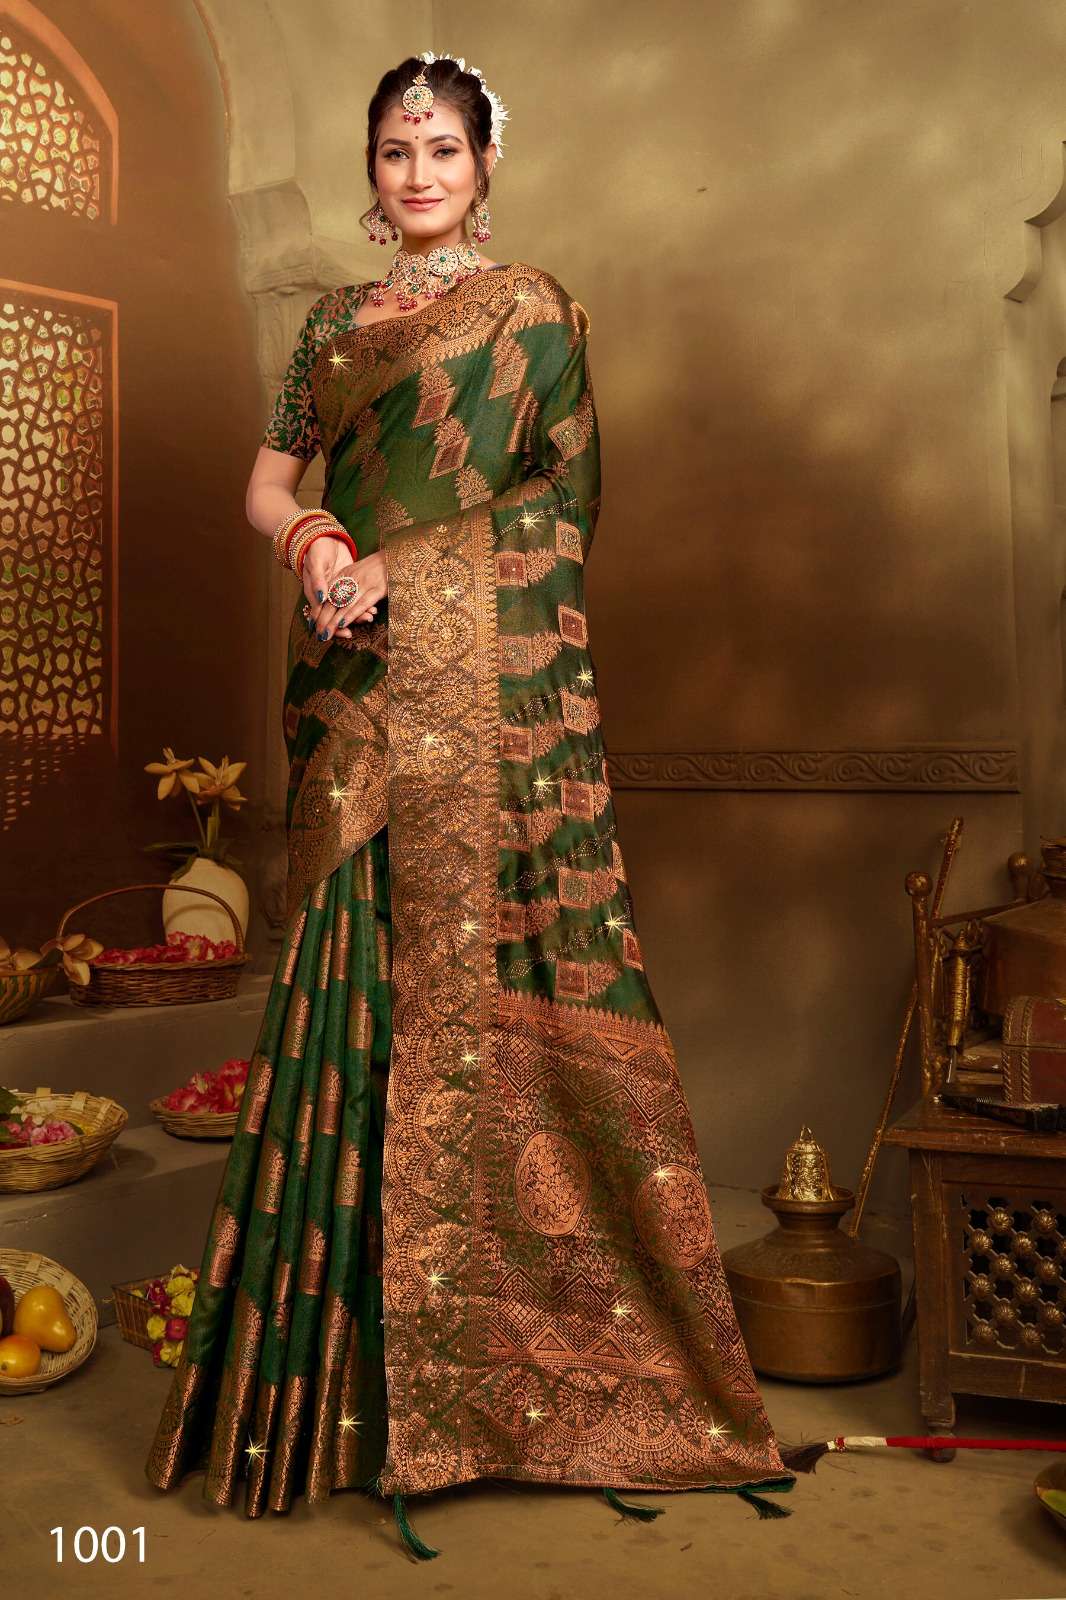 saroj saree noorani 2 soft khadi oraganza regal look saree catalog